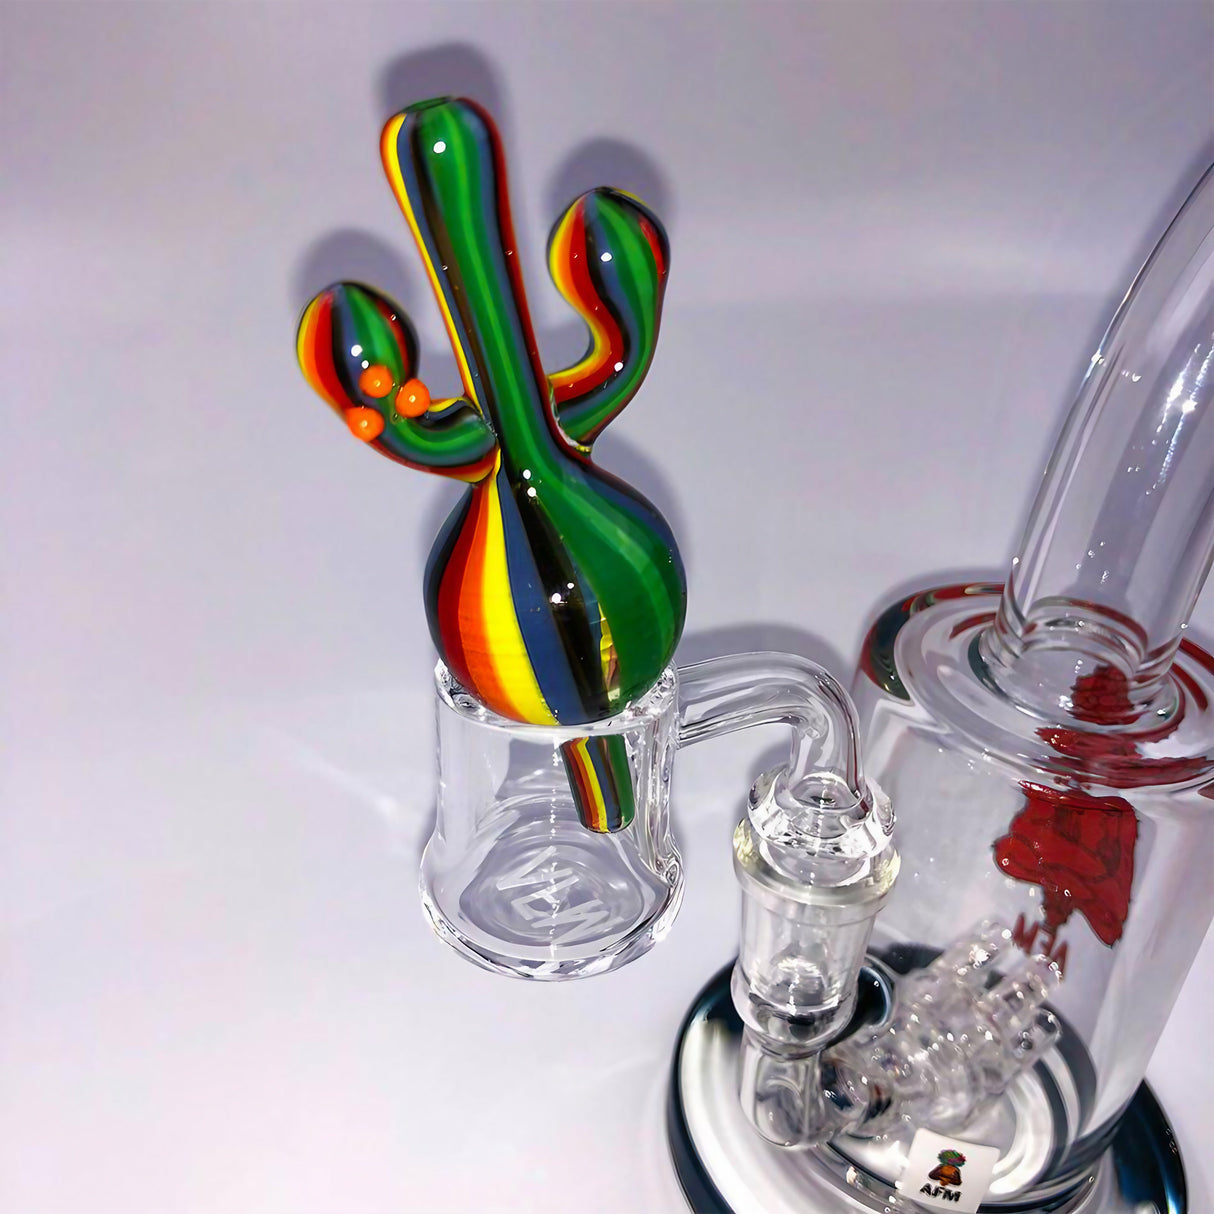 AFM Glass - Cactus Carb Cap for Dab Rigs, Colorful Novelty Design, 3" Borosilicate Glass